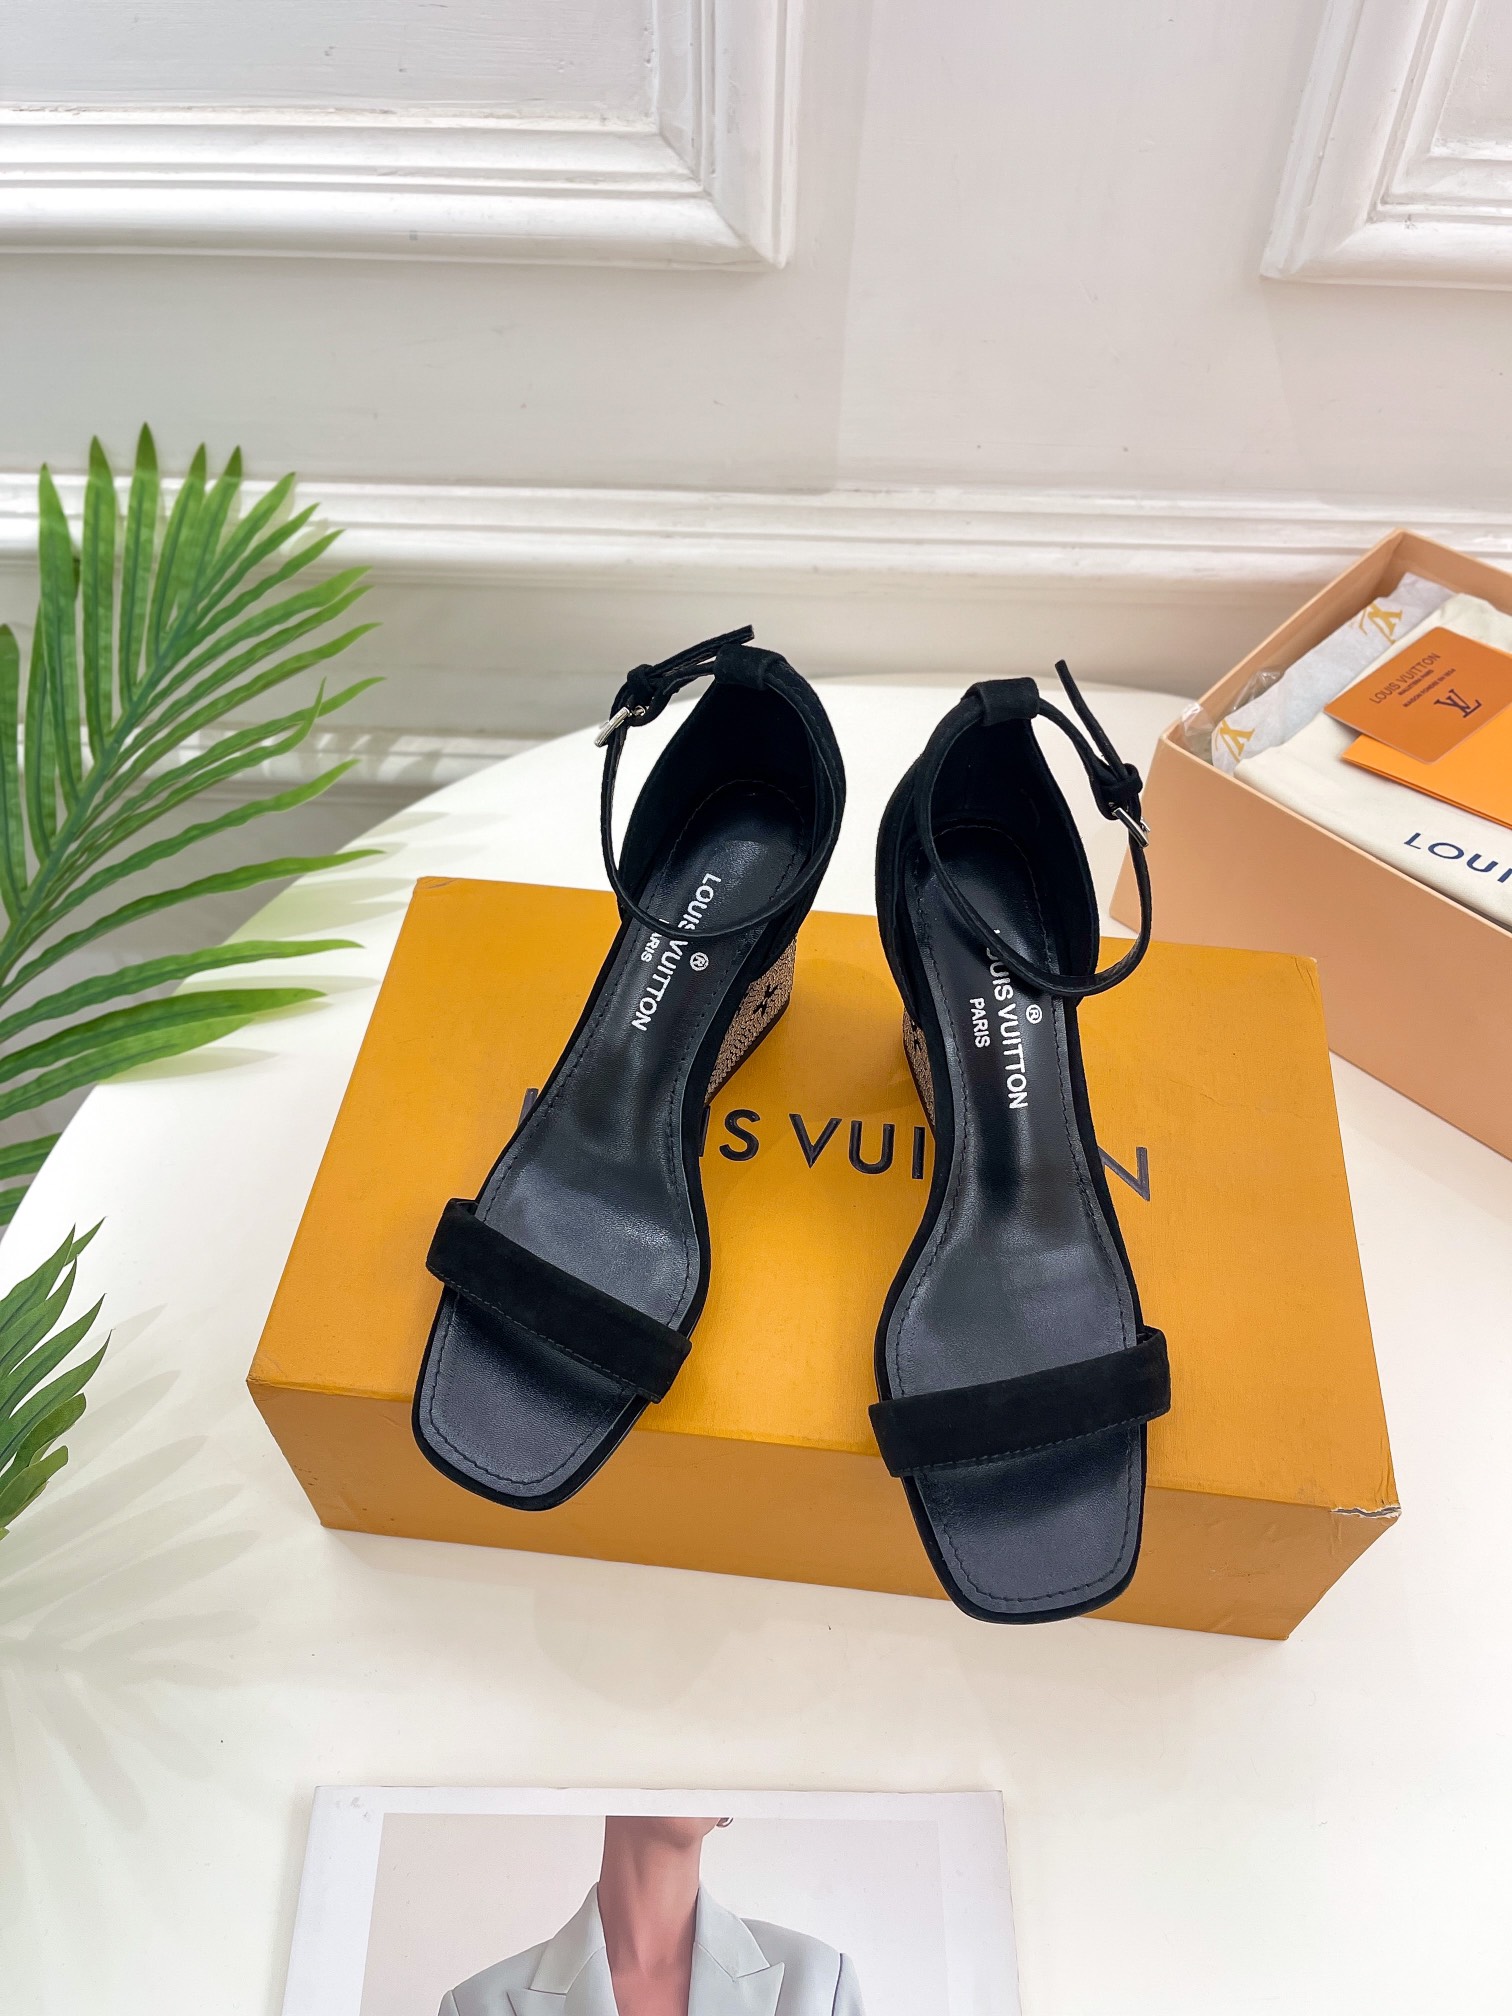 Louis Vuitton Shoes High Heel Pumps Sandals Genuine Leather Sheepskin Spring Collection Vintage